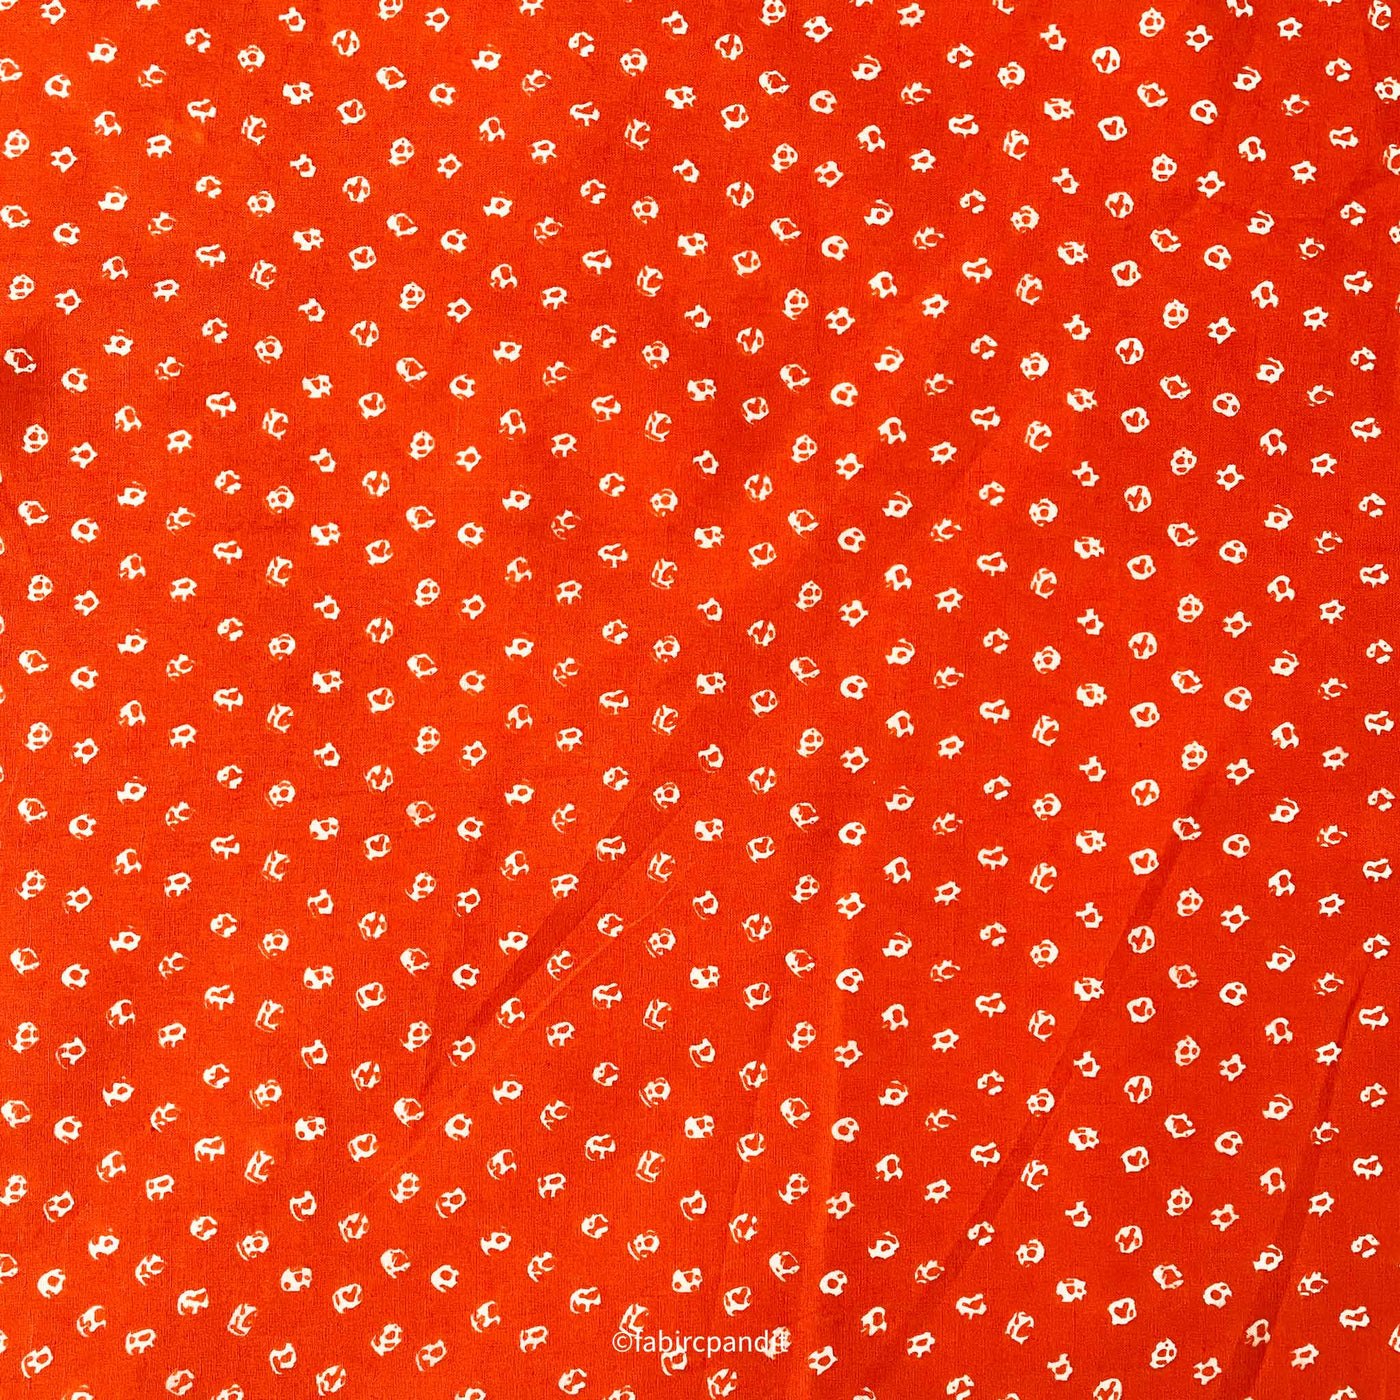 Fabric Pandit Fabric Bright Orange Bandhani Pattern Hand Block Printed Pure Cotton Fabric (Width 43 inches)